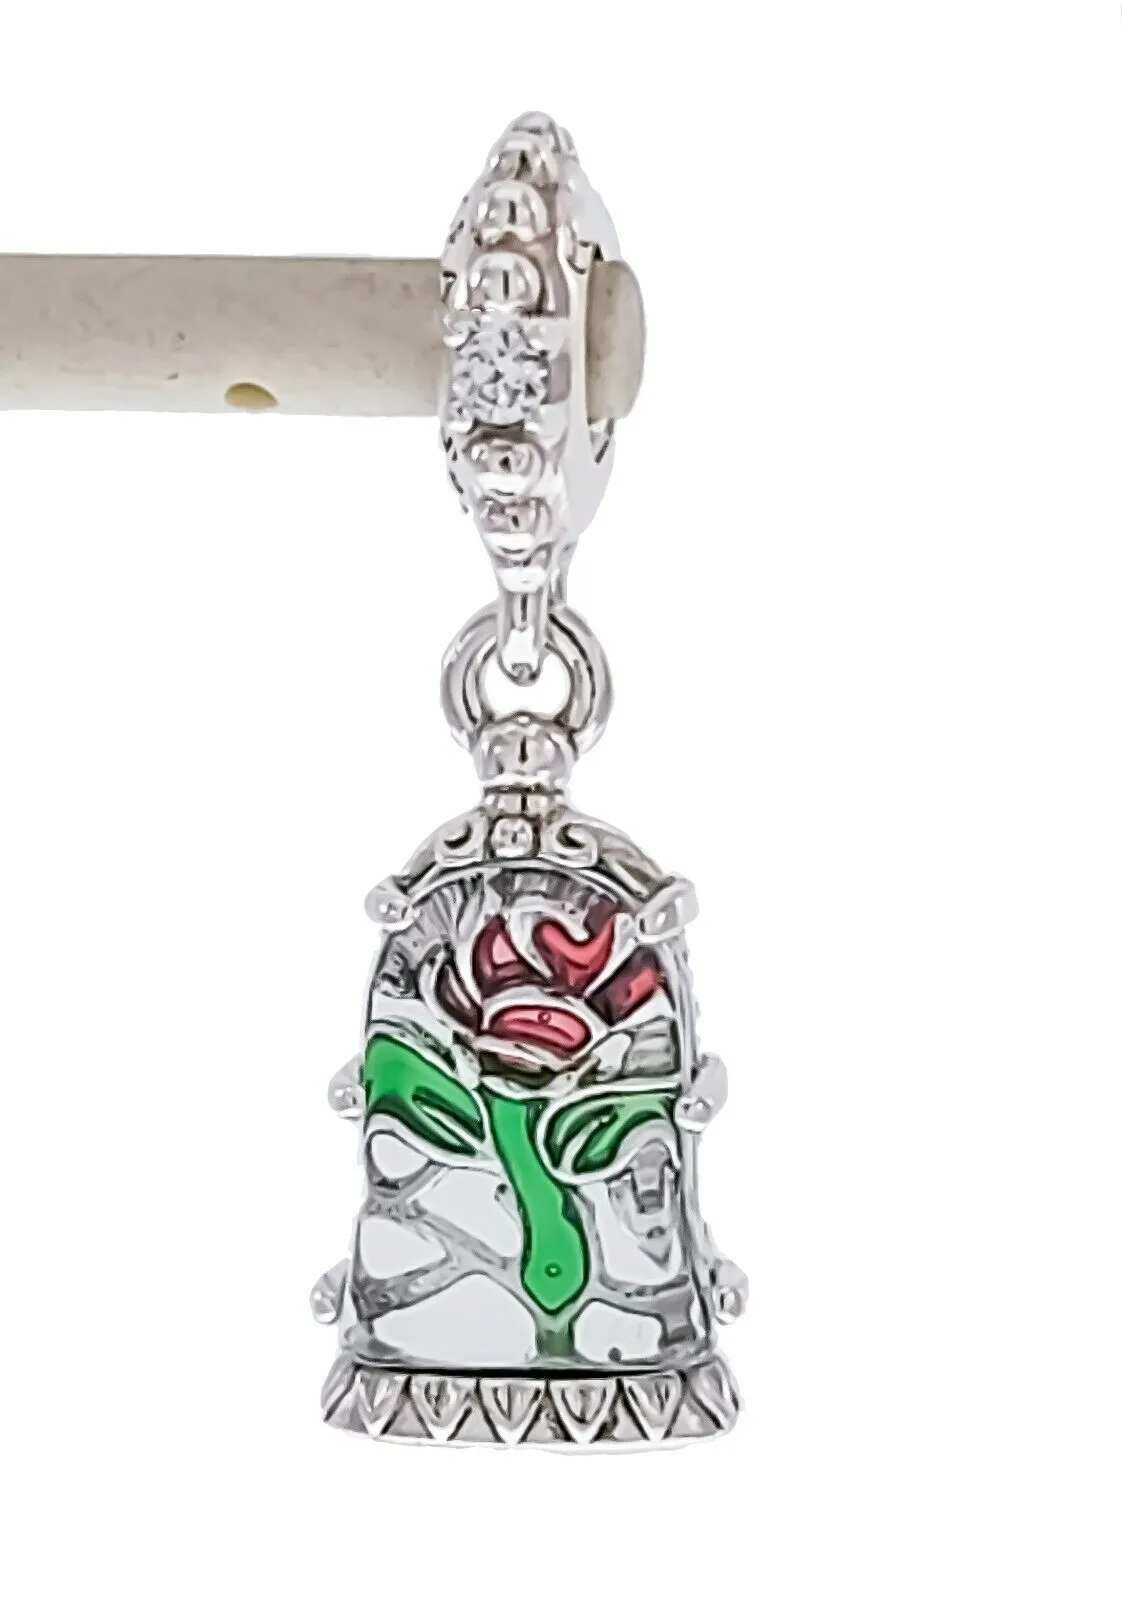 Authentic Pandora 925 Sterling Silver Disny Beauty Rose flower Dangle Charm fit European loose bead bracelet Jewelry 790024C01